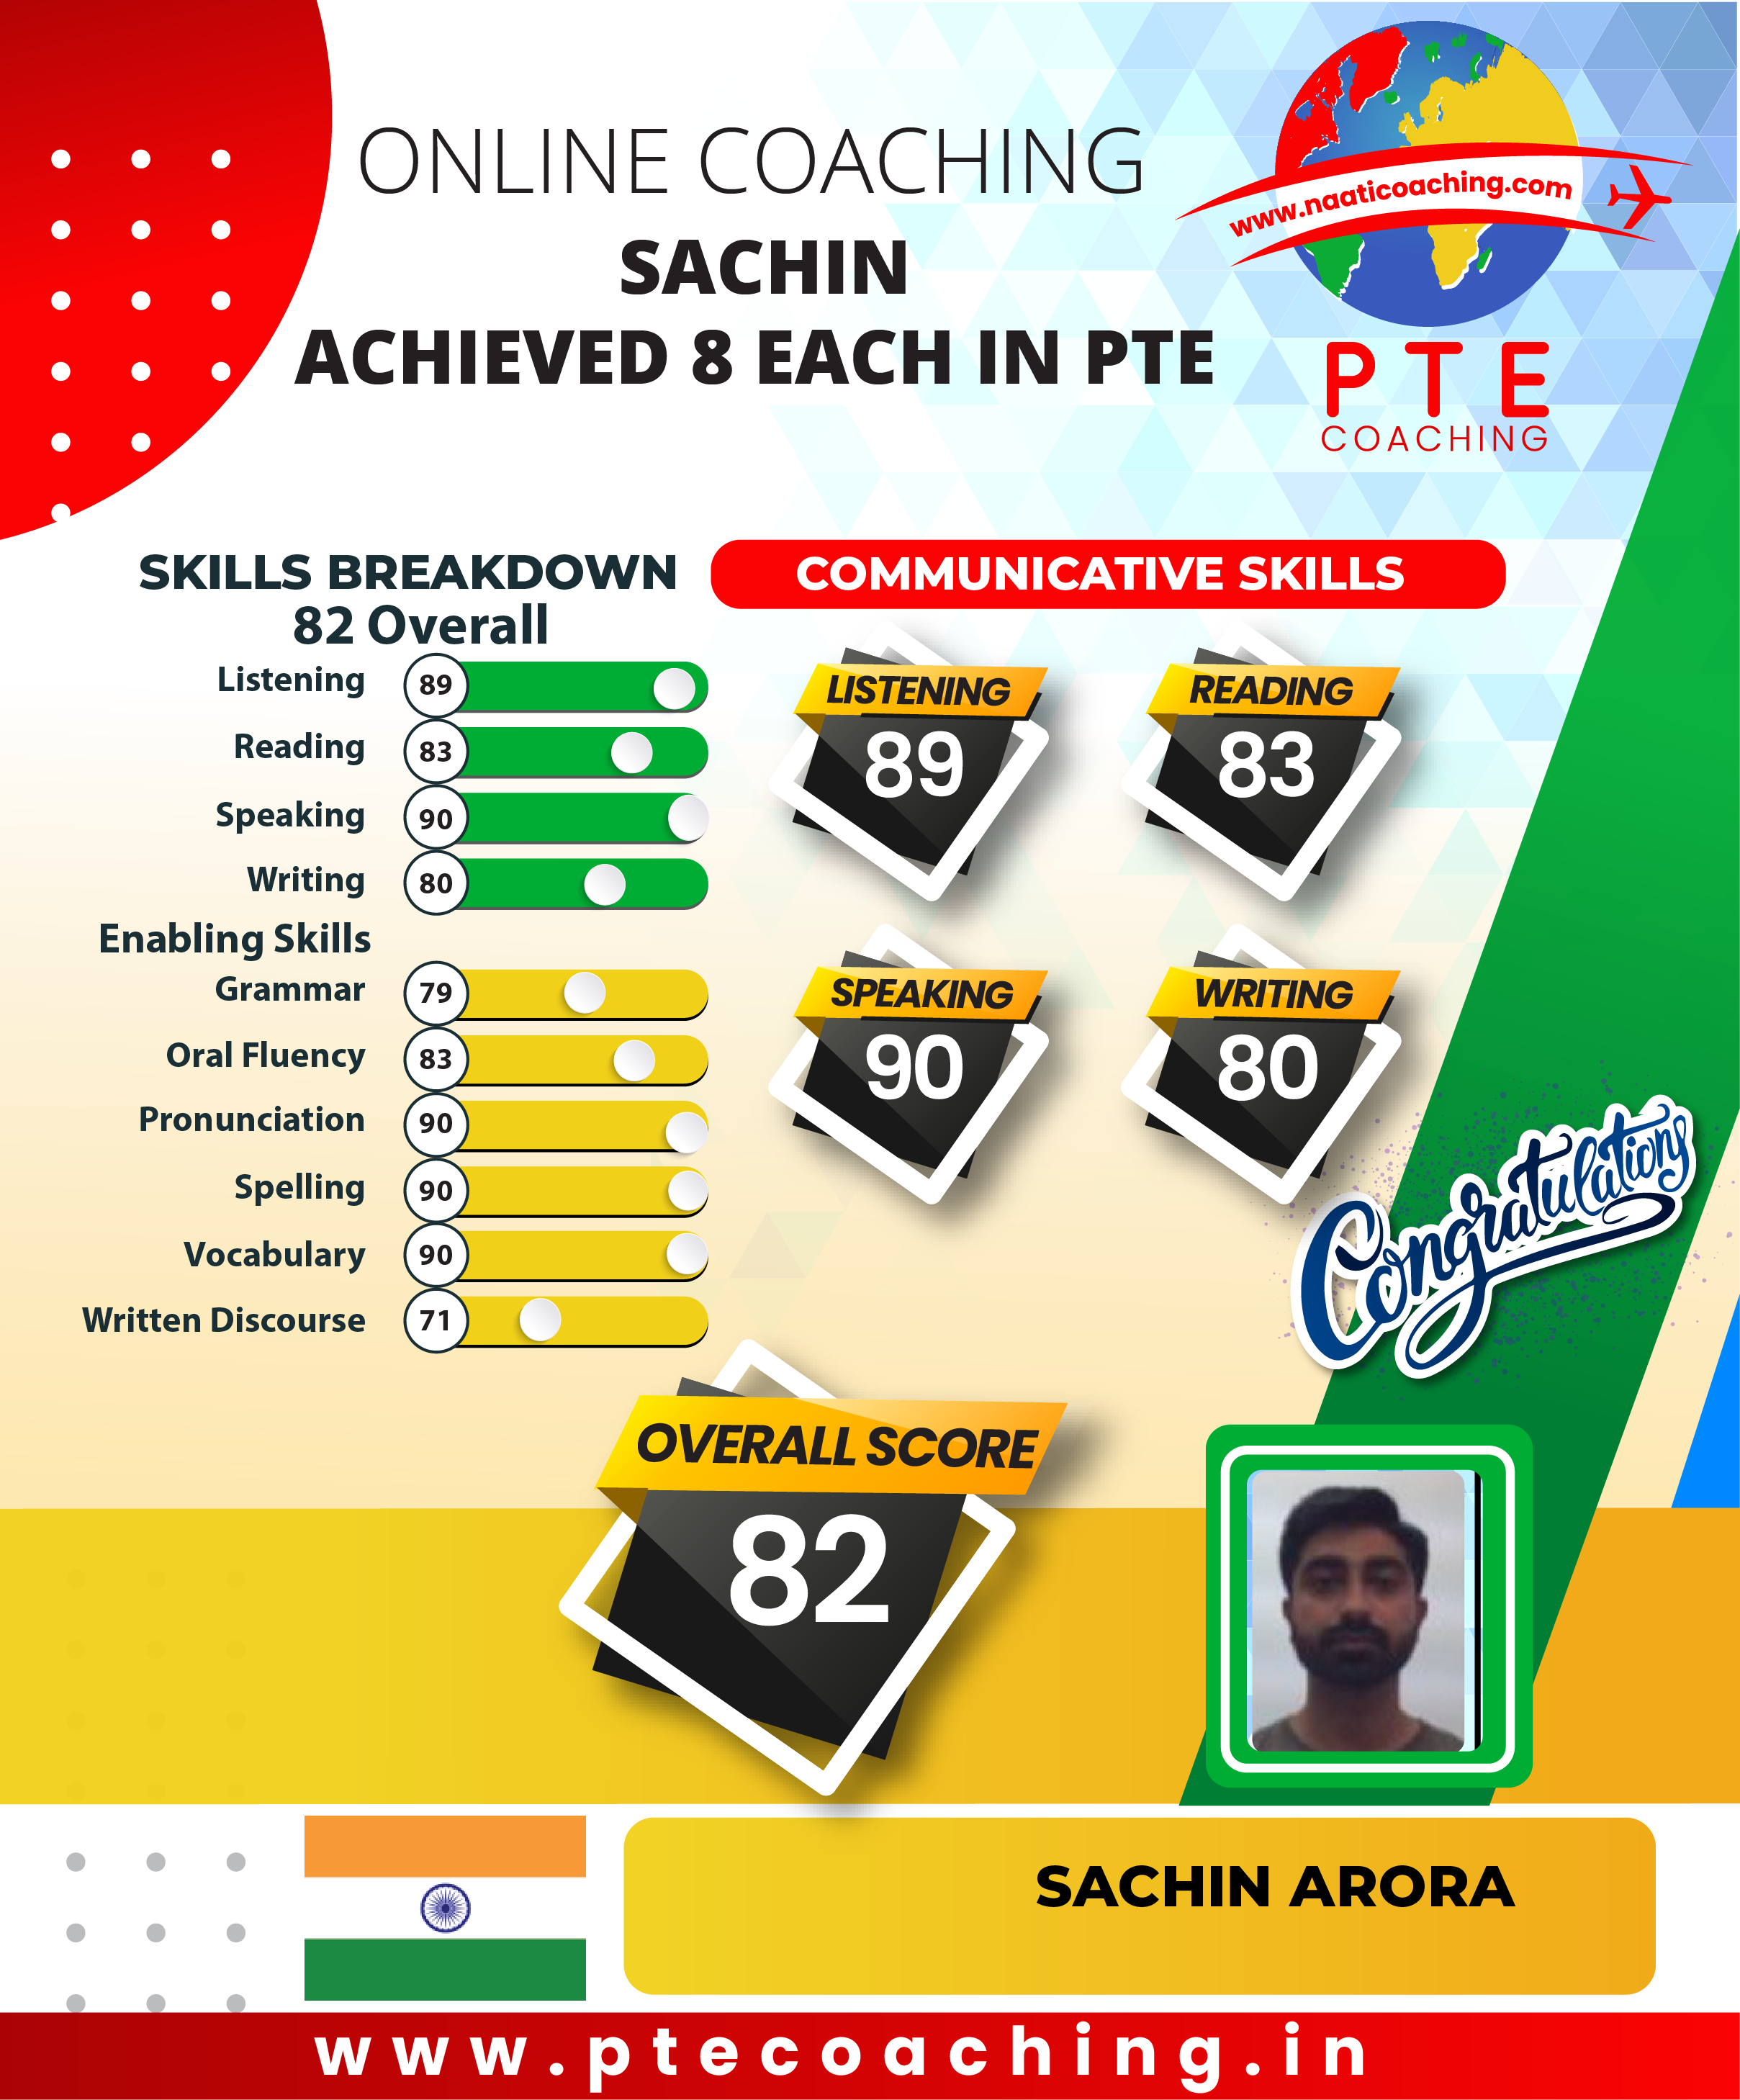 PTE Coaching Scorecard - Sachin achieved 8 each in PTE